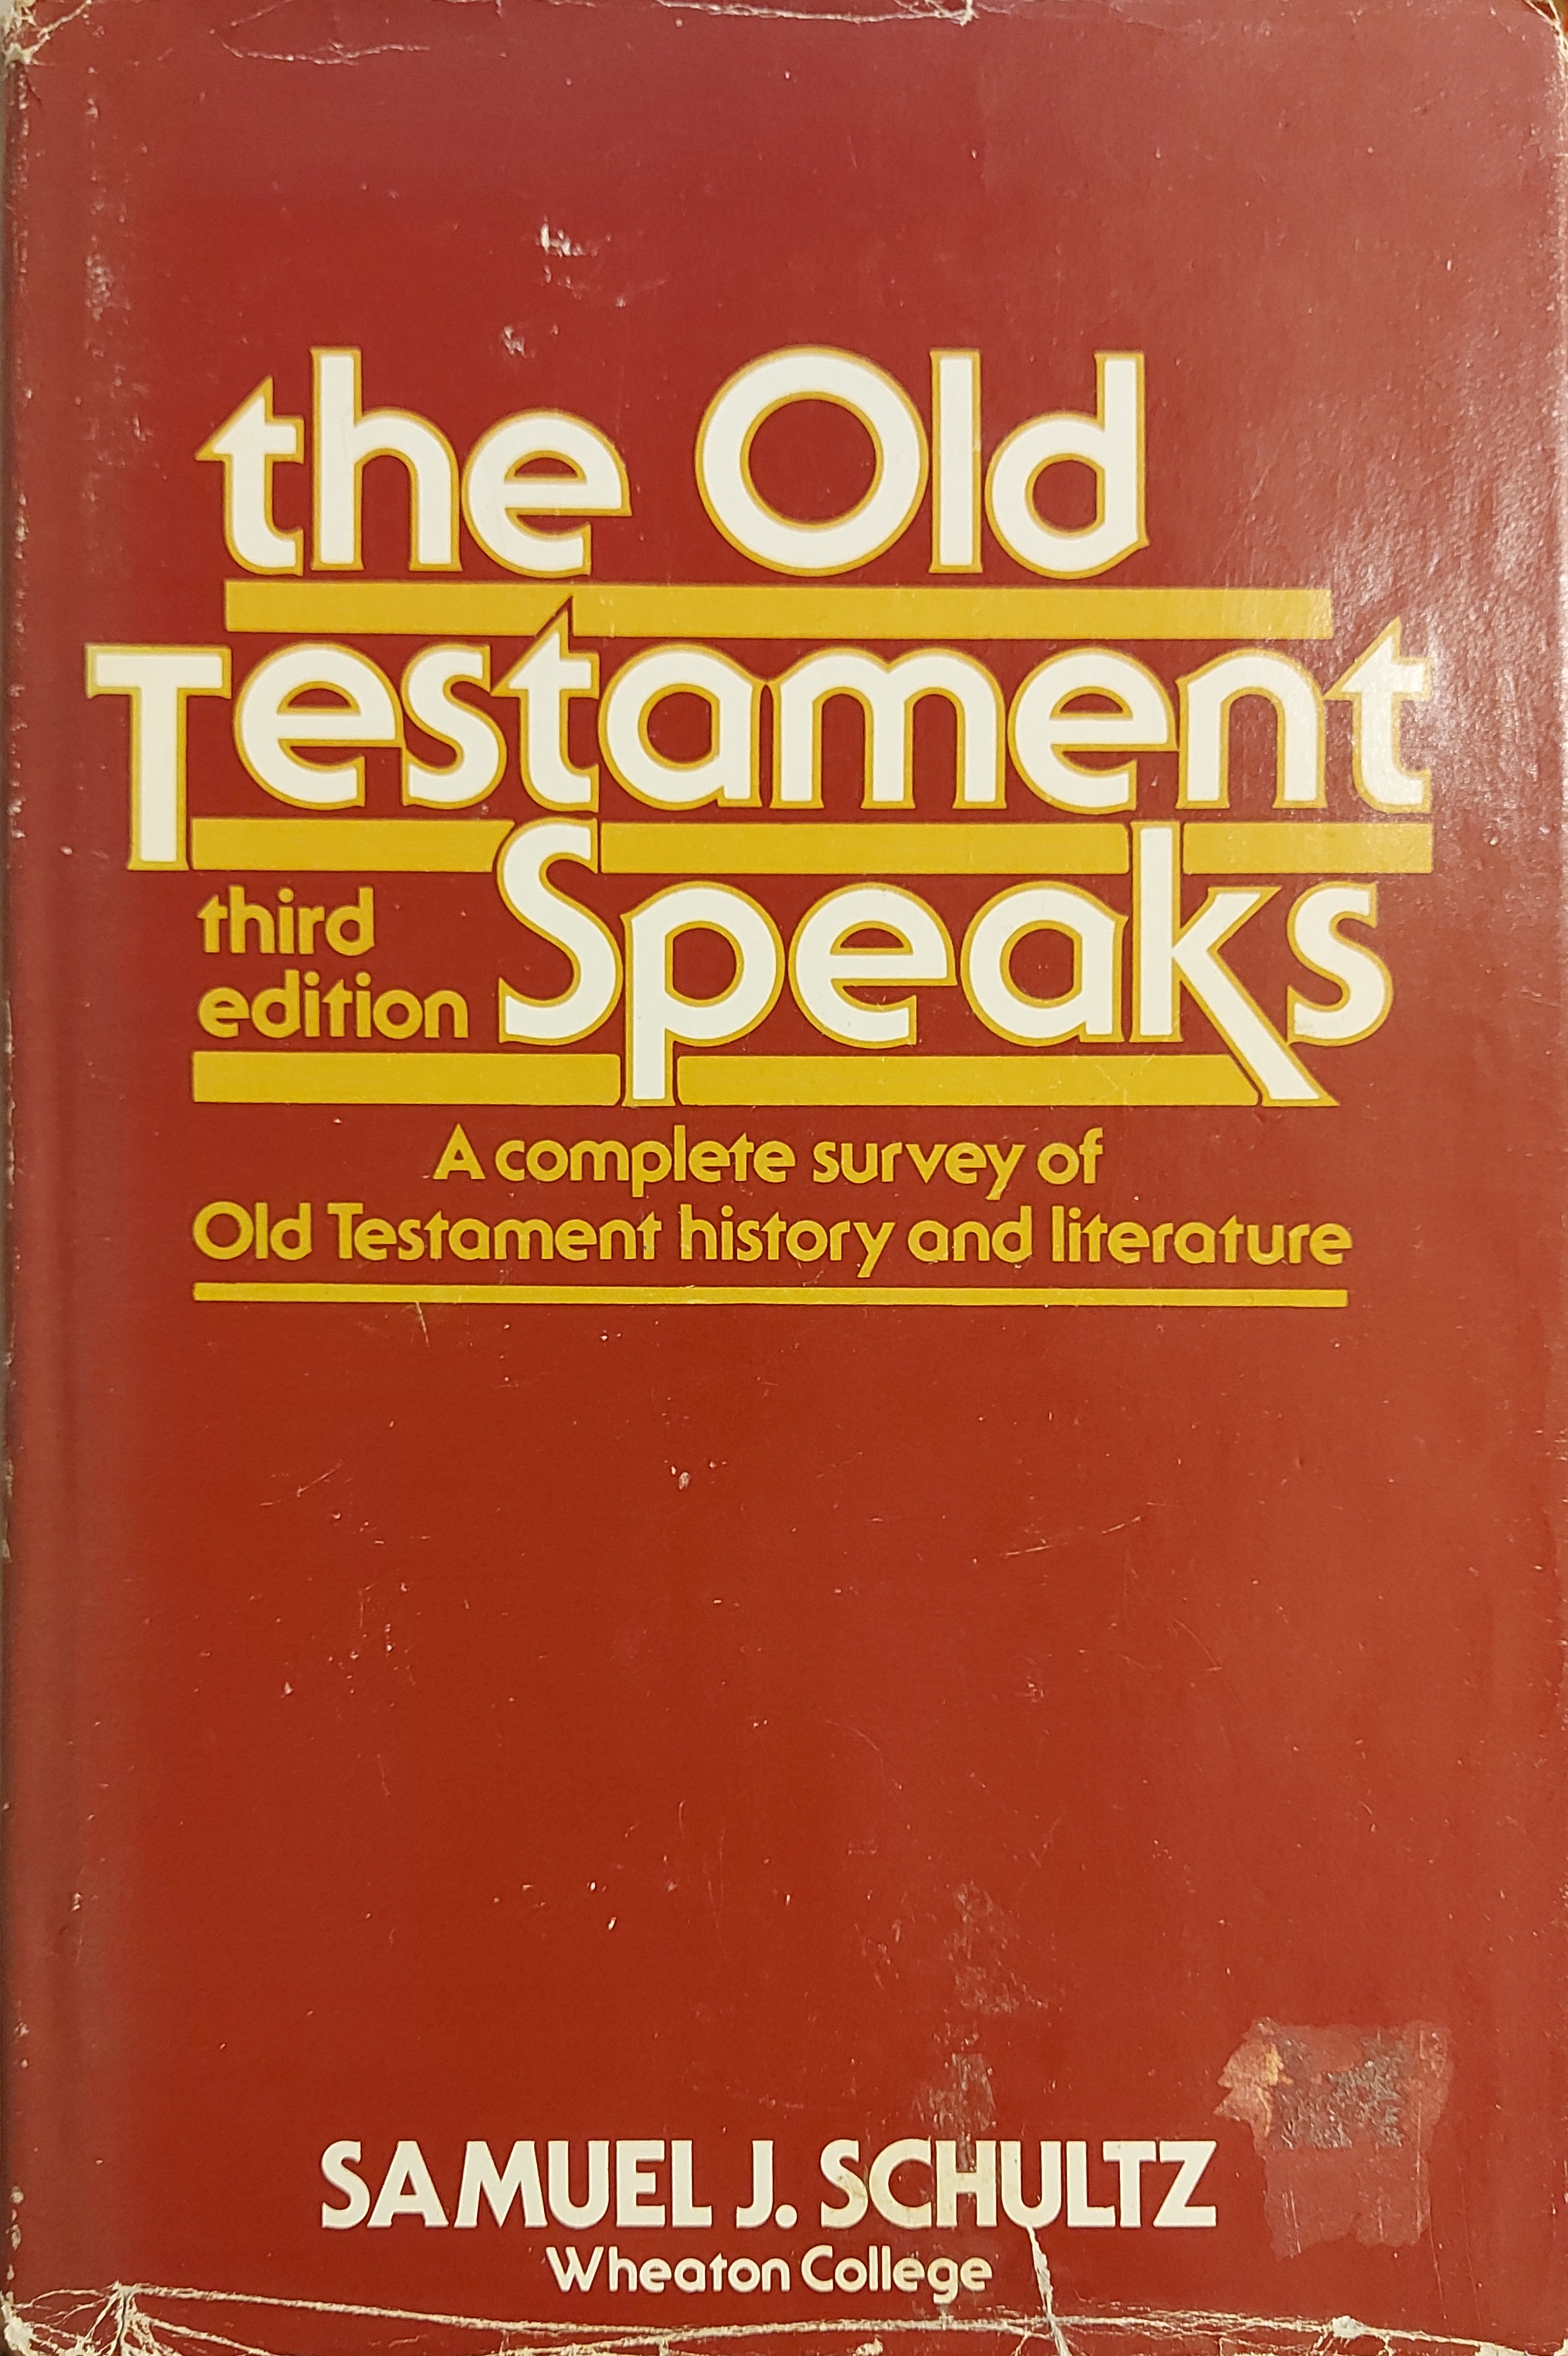 The Old Testament Speaks, third edition